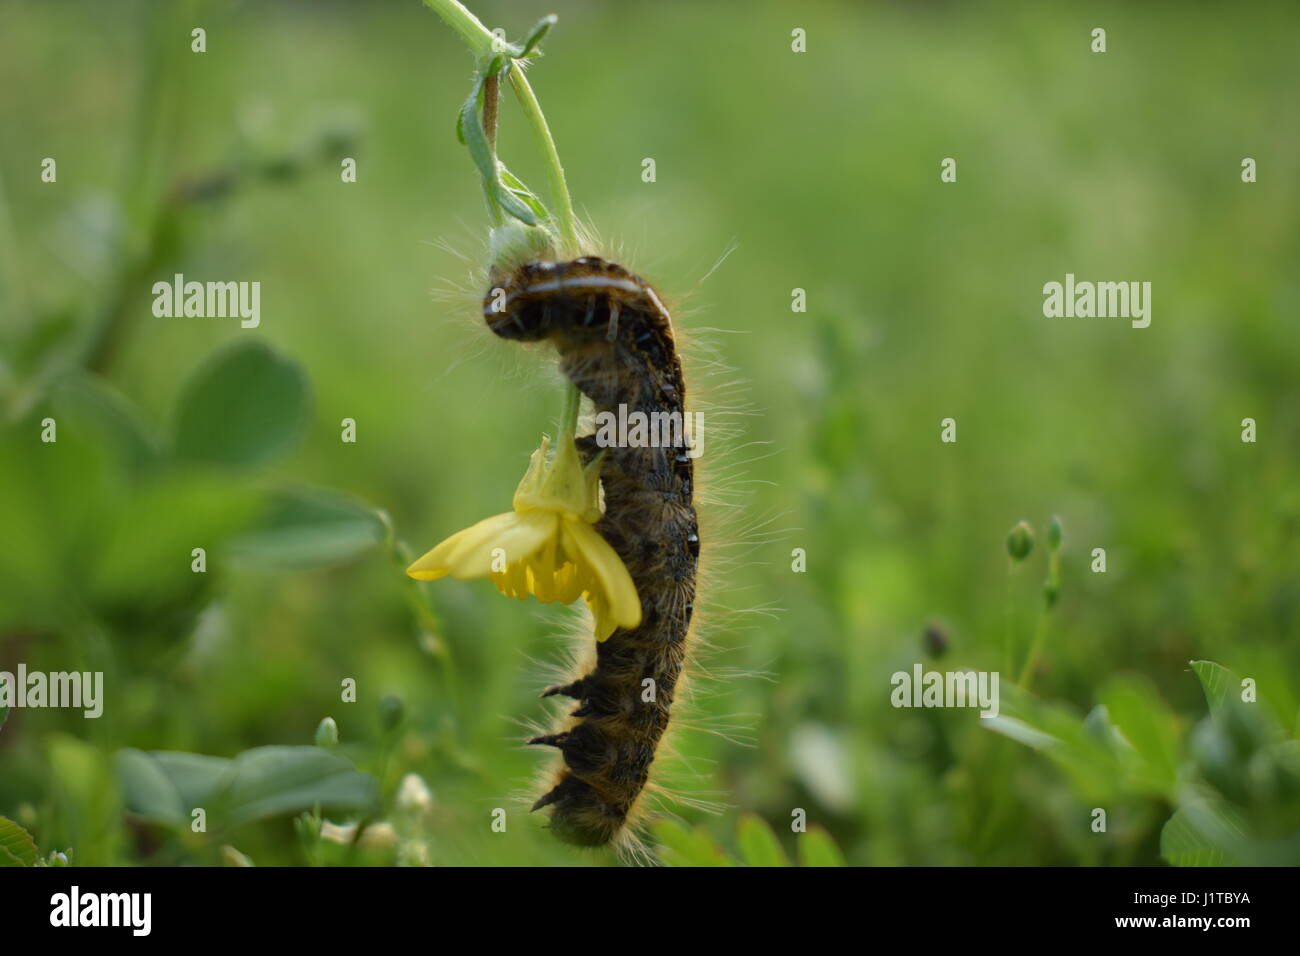 caterpillar climbing up yellow flower and smiling boy Stock Photo